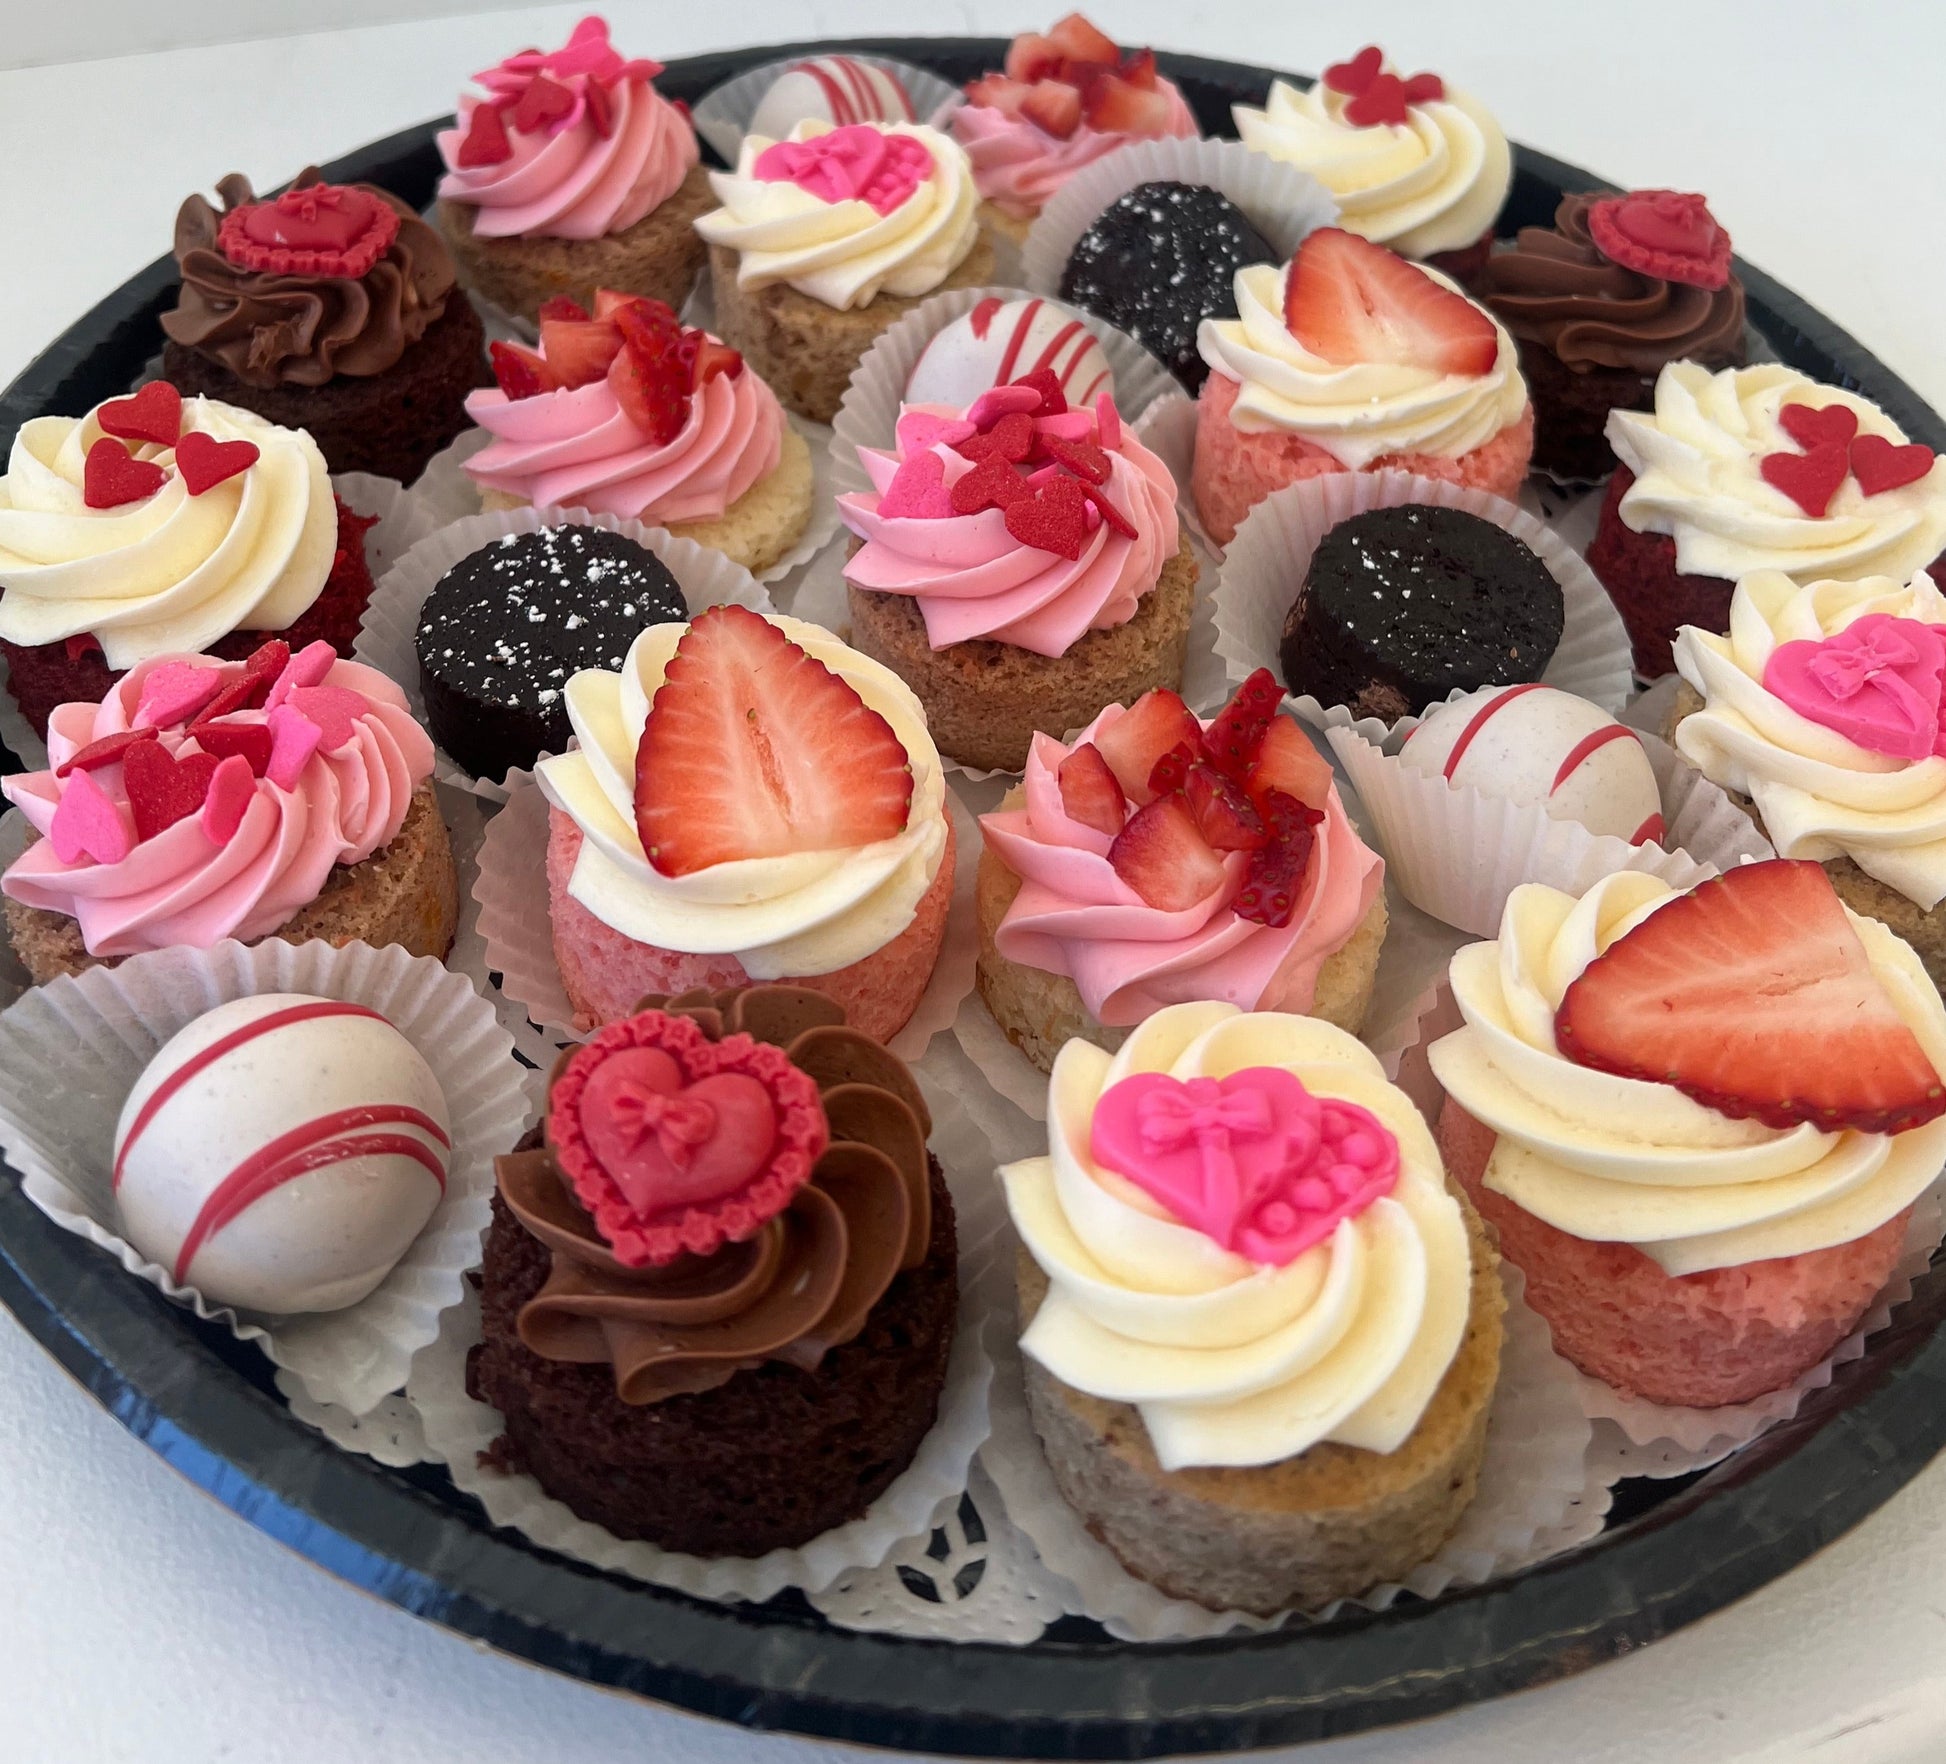 Valentine's Day Tasting Platter - The Dessert Ladies